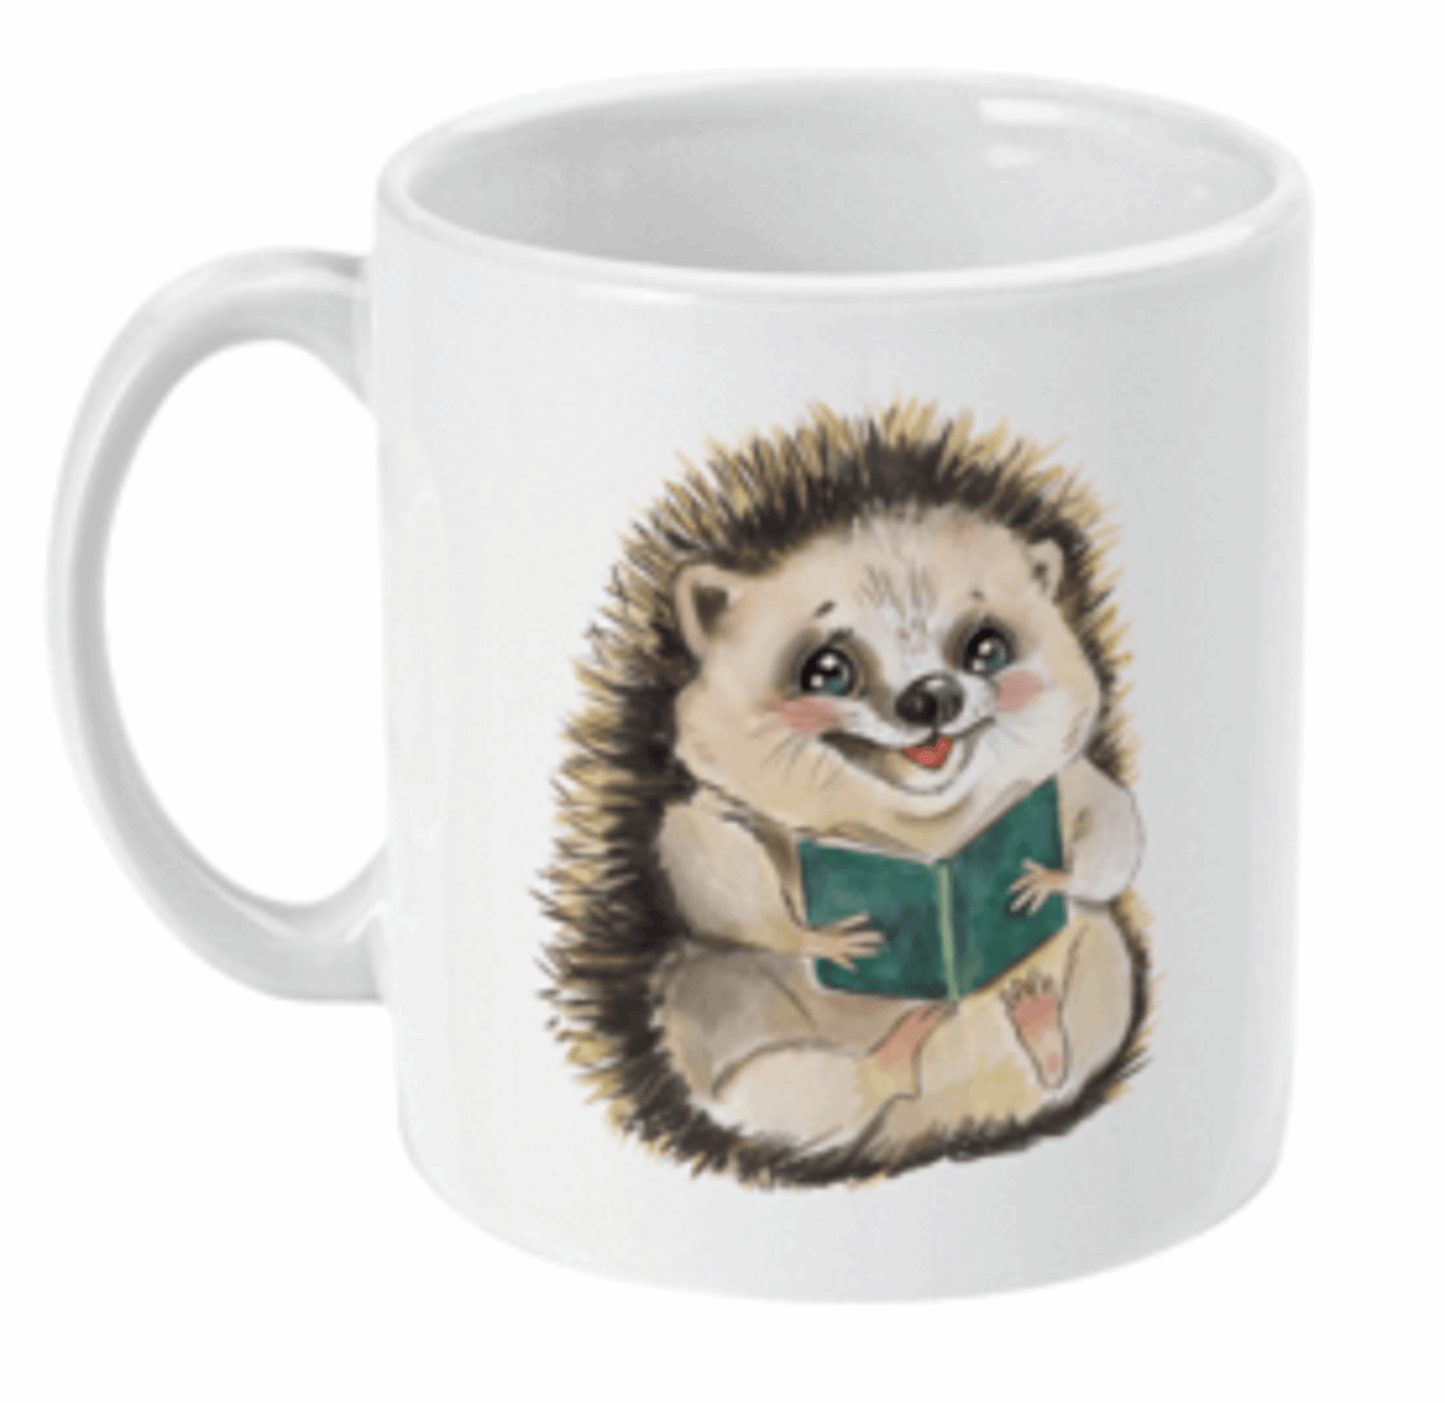  Hedgehog with Book Coffee Mug by Free Spirit Accessories sold by Free Spirit Accessories